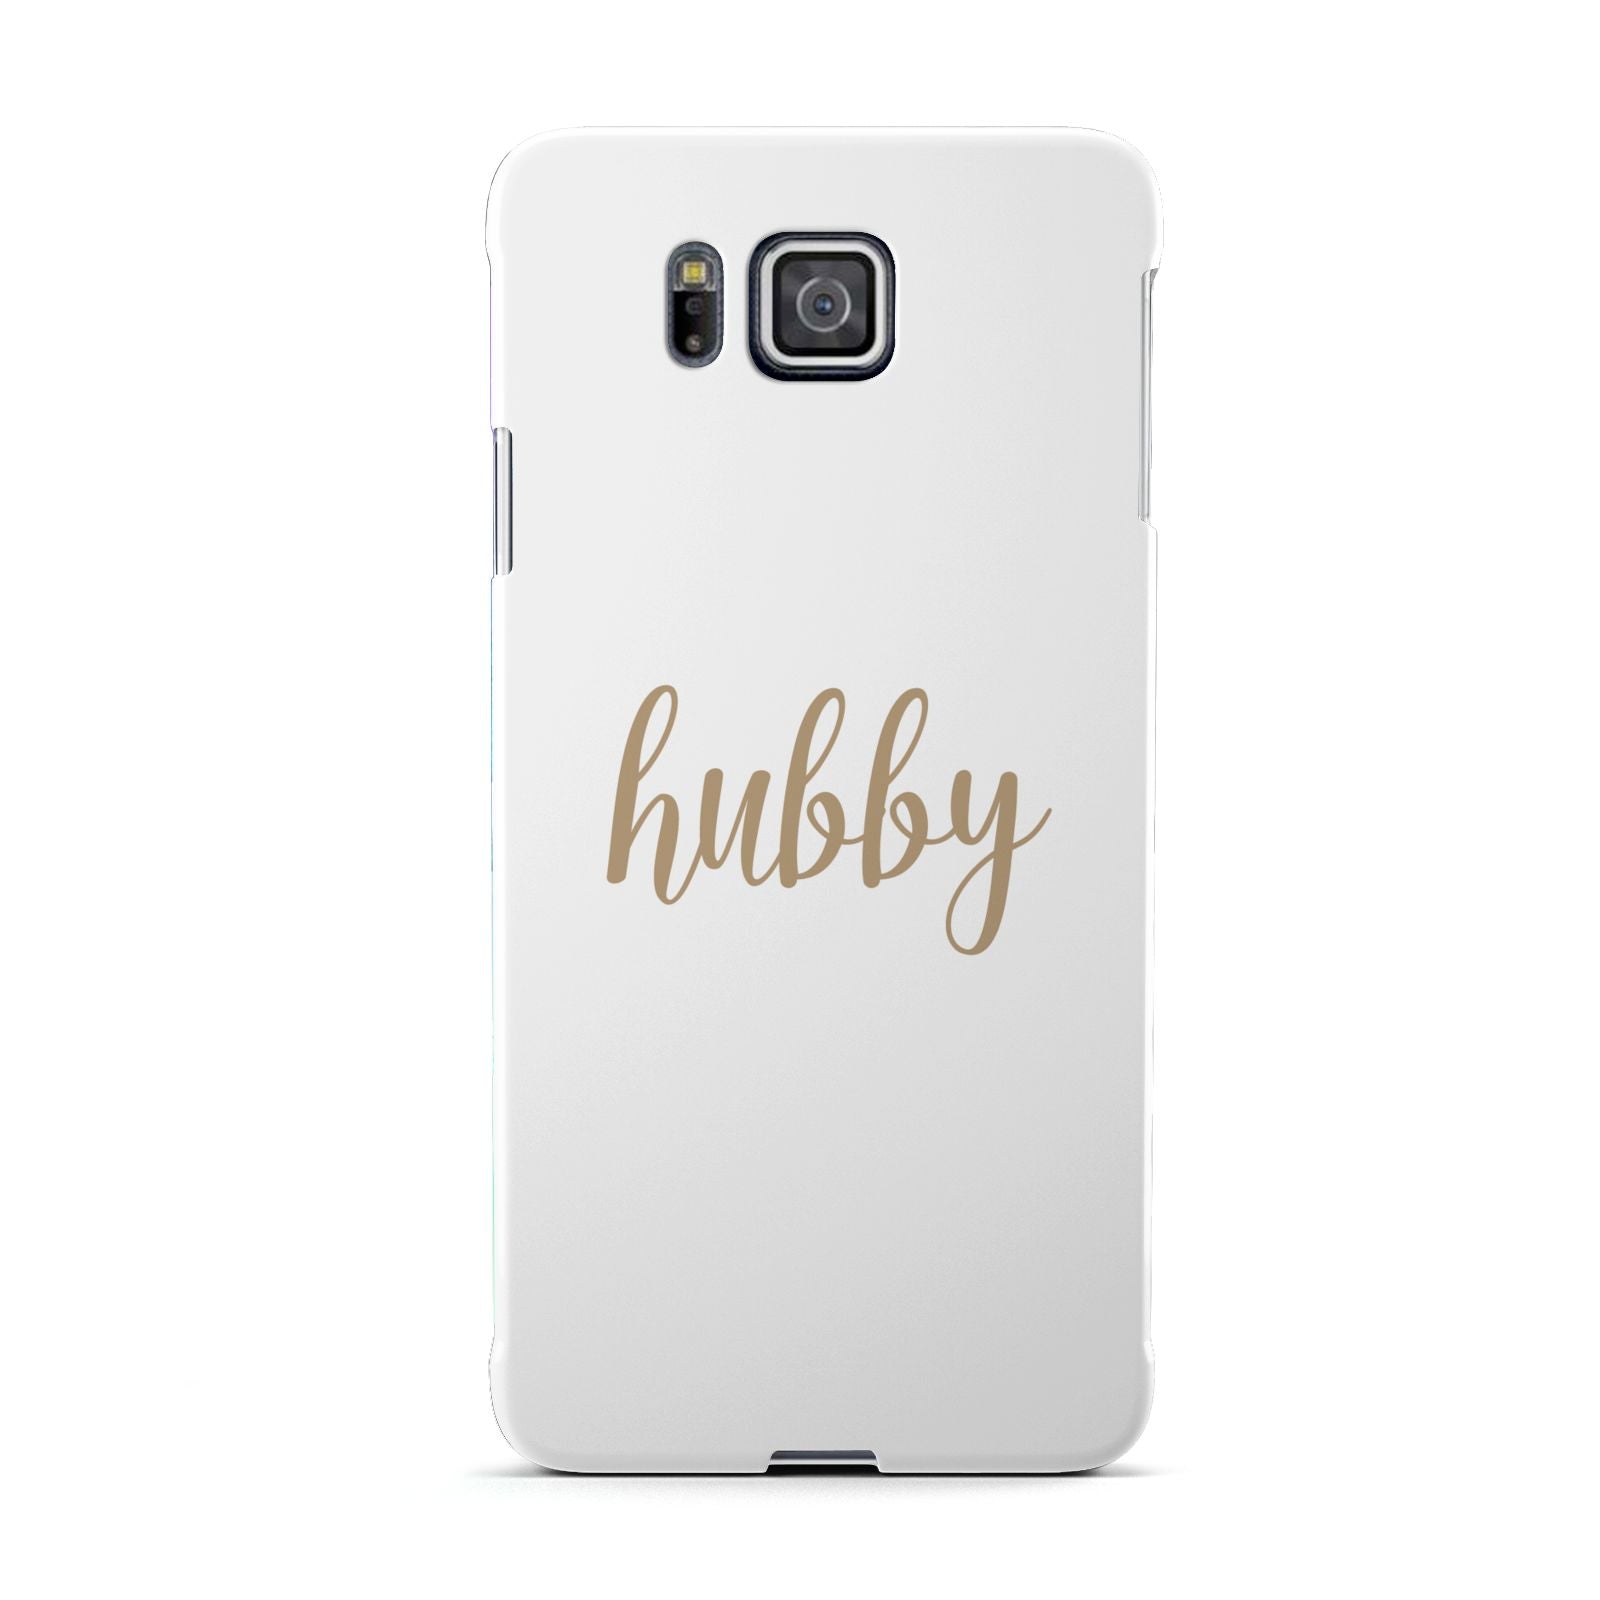 Hubby Samsung Galaxy Alpha Case